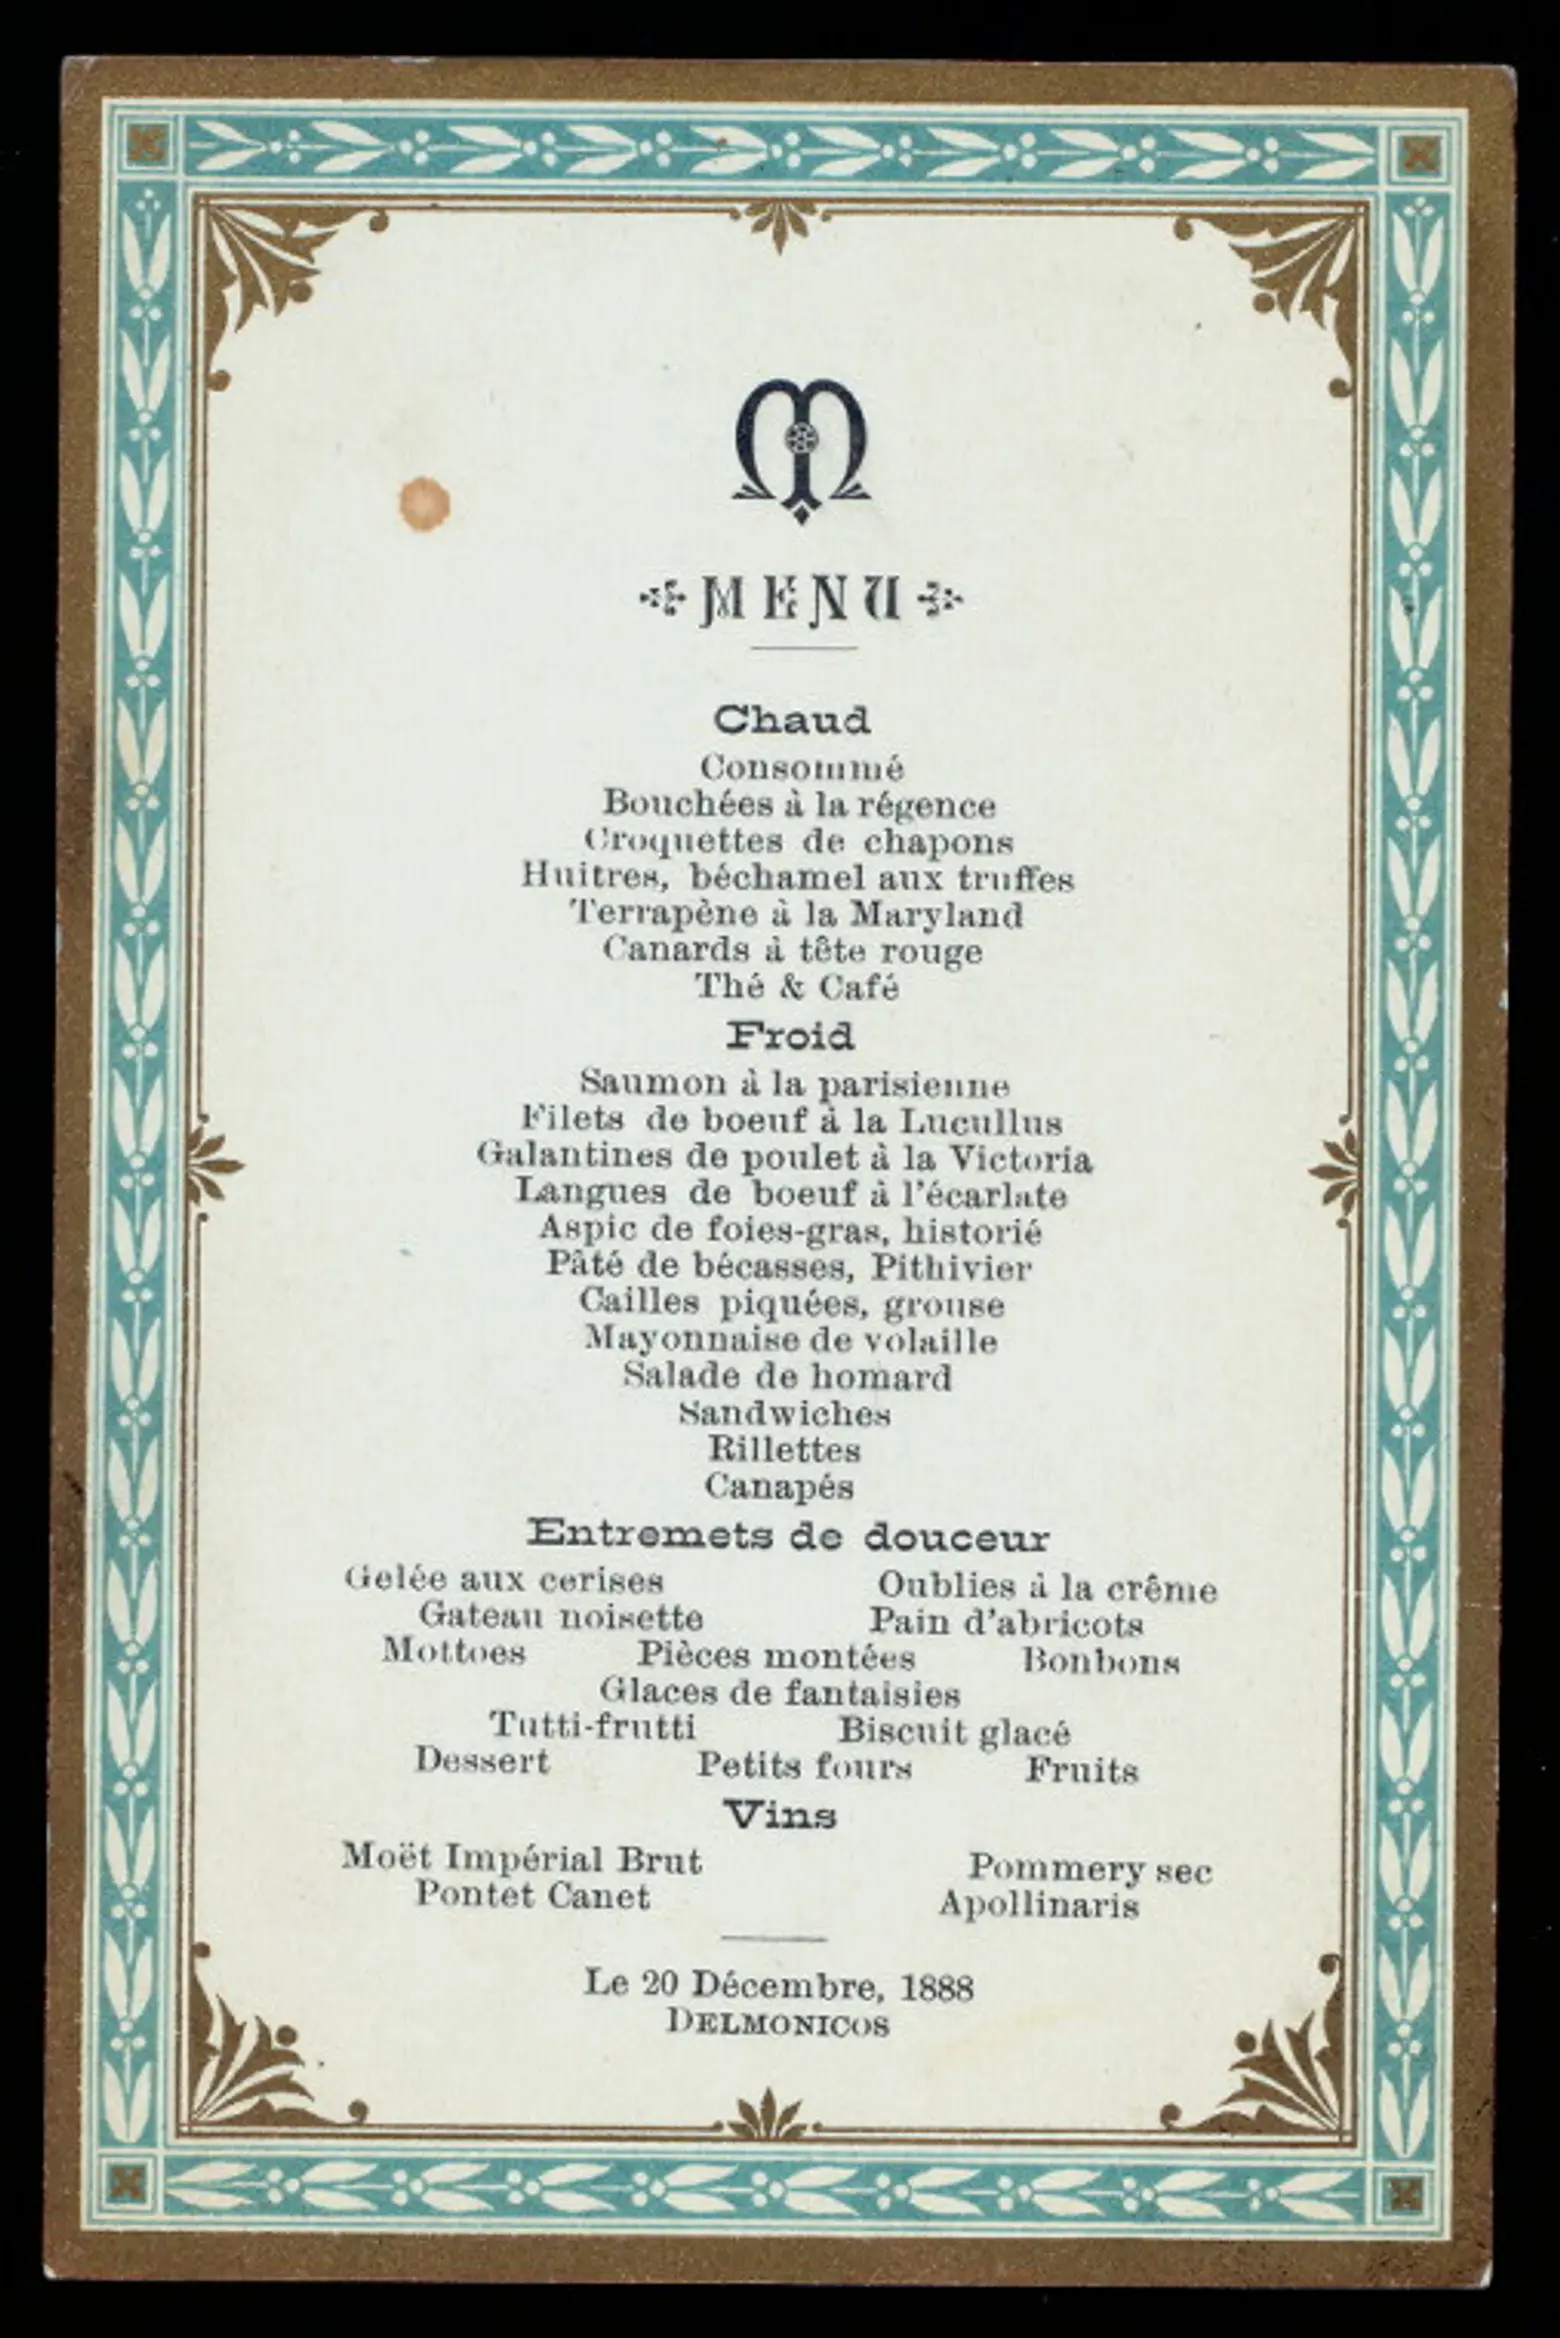 delmonics historic menu, delmonics 19th century menu